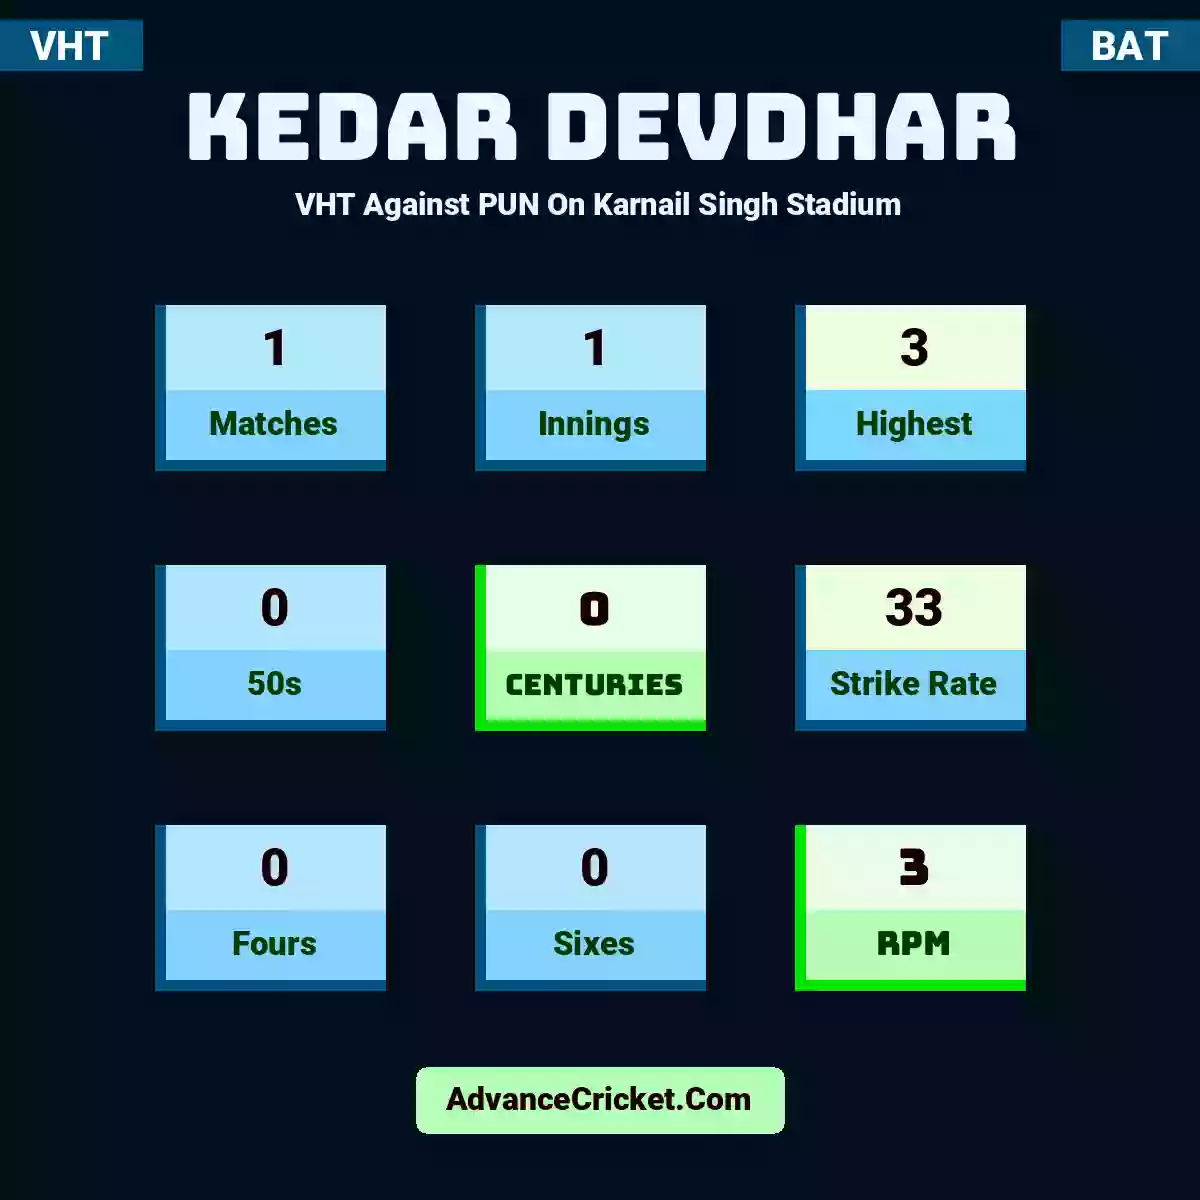 Kedar Devdhar VHT  Against PUN On Karnail Singh Stadium, Kedar Devdhar played 1 matches, scored 3 runs as highest, 0 half-centuries, and 0 centuries, with a strike rate of 33. K.Devdhar hit 0 fours and 0 sixes, with an RPM of 3.